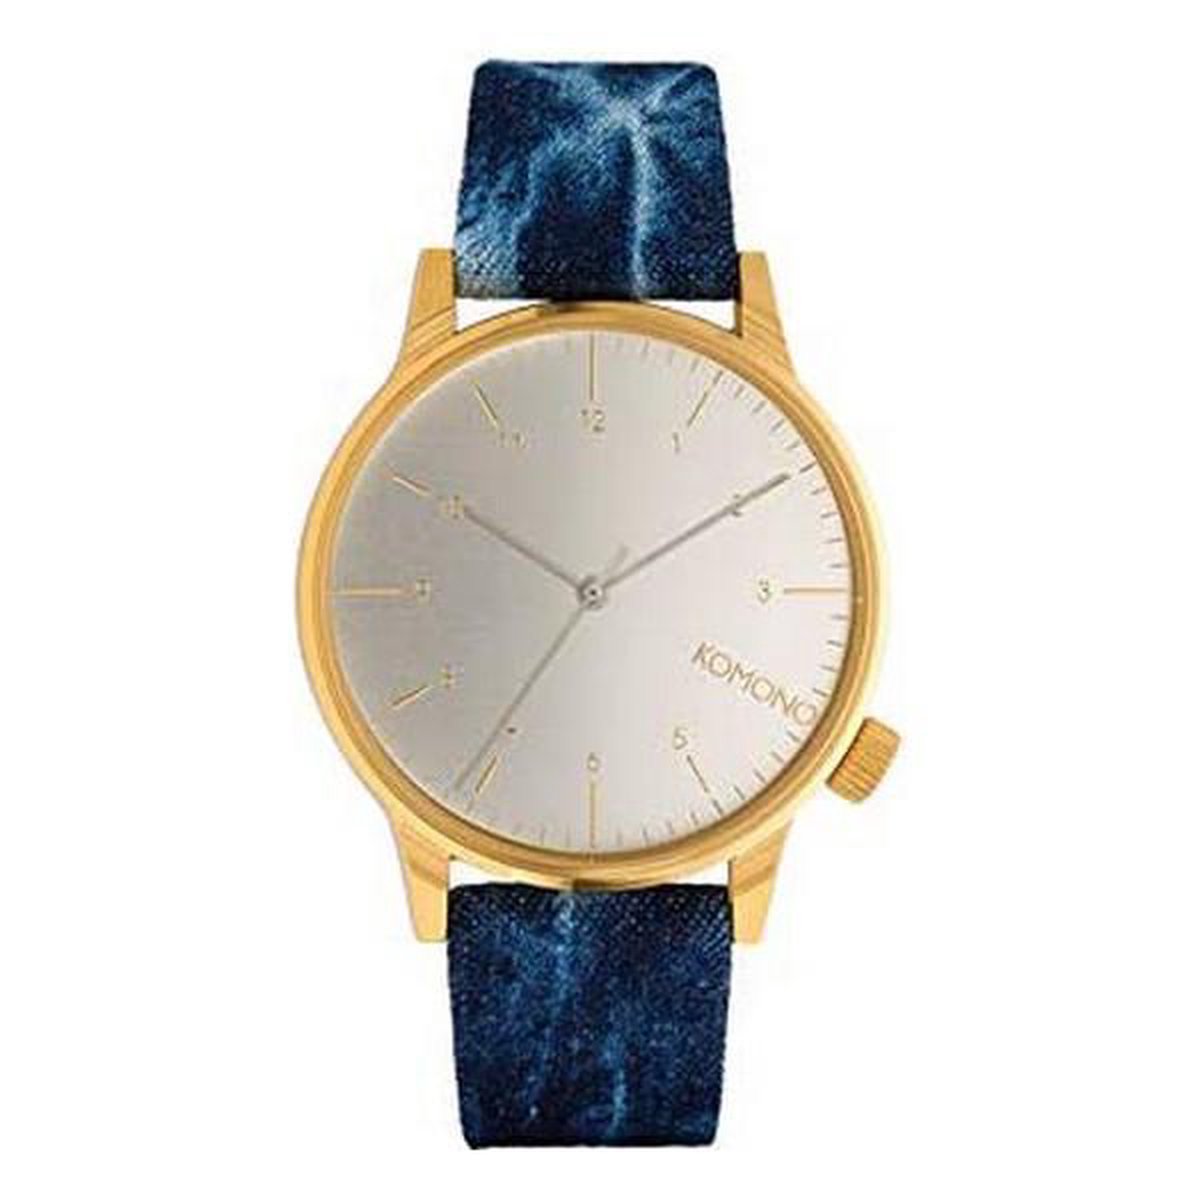 Komono Winston Heritage Gold-Blue Jeans horloge KOM-W2132